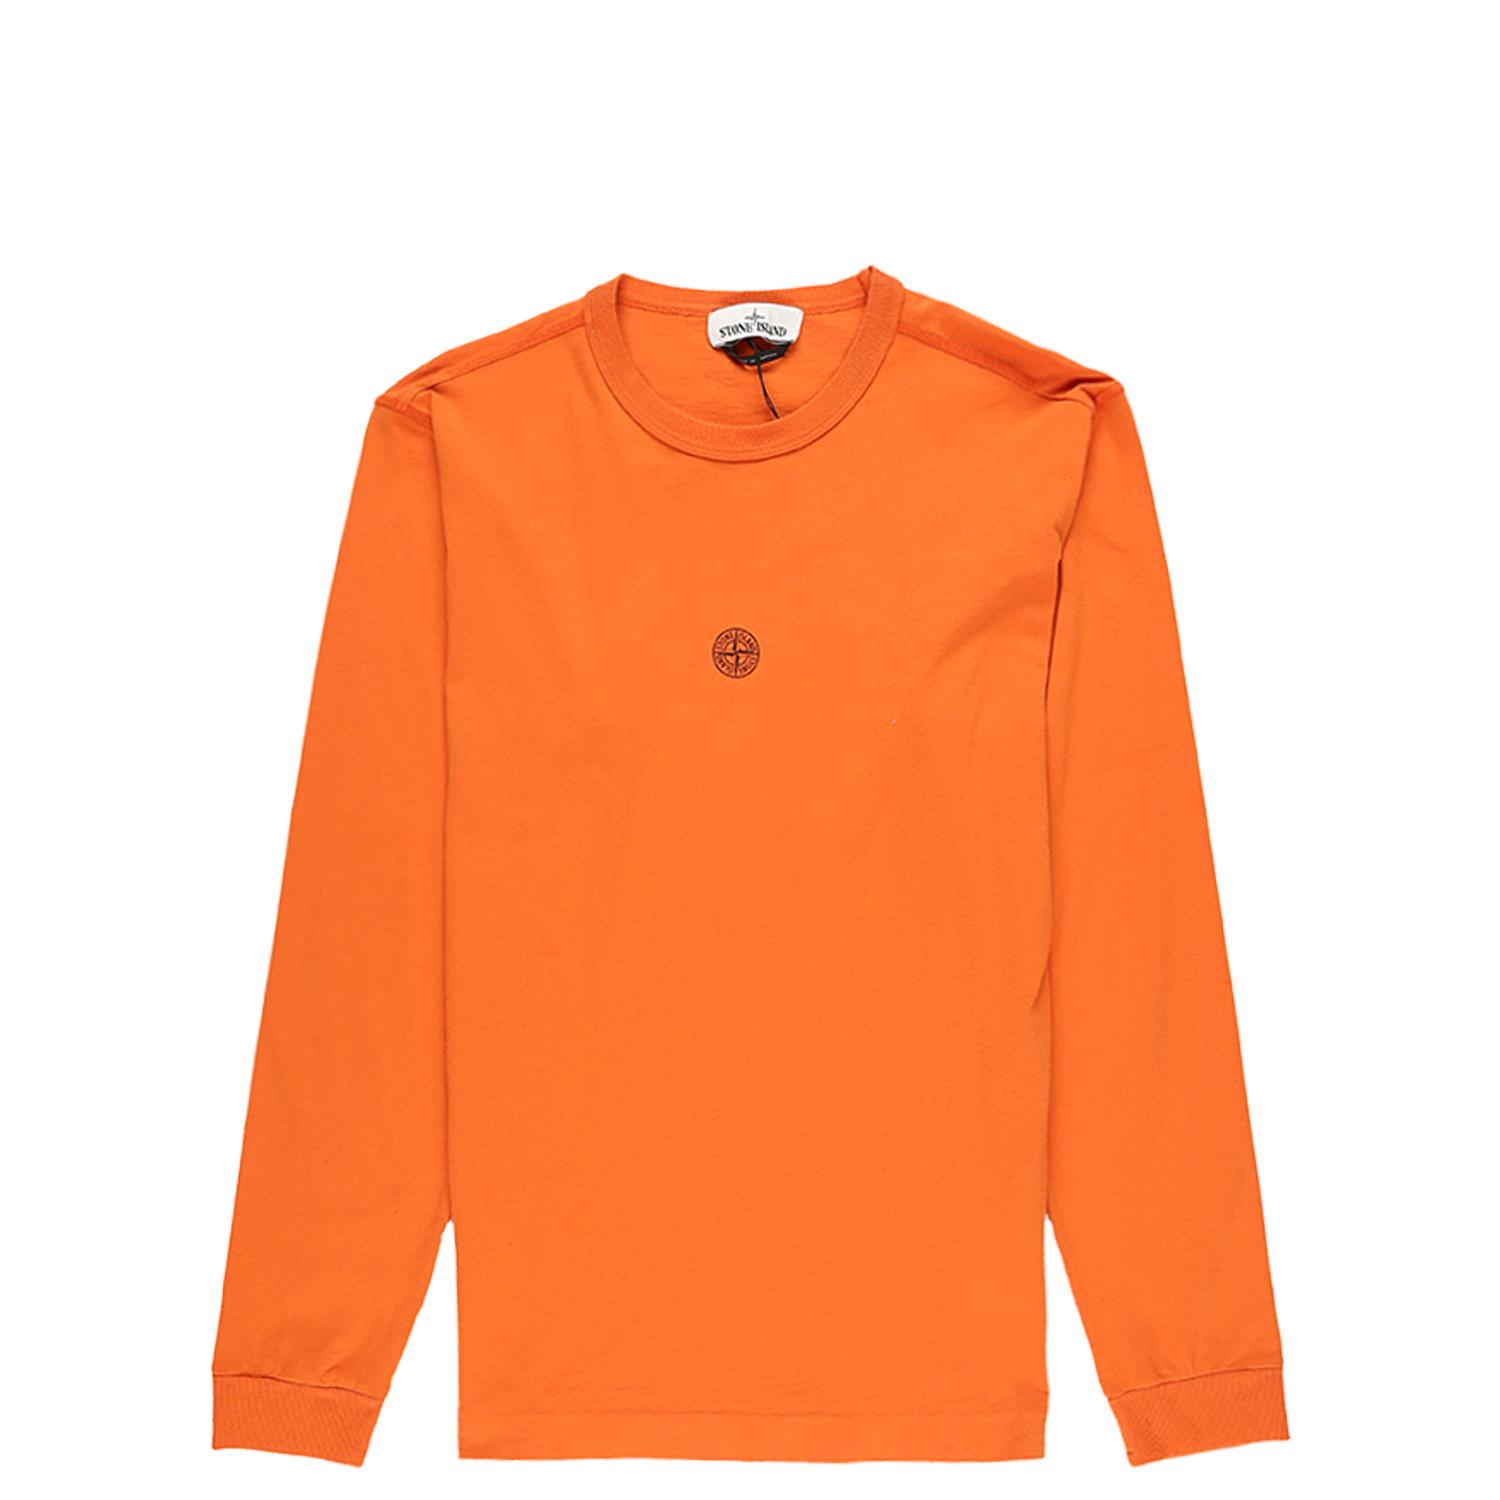 Stone Island Cotton Long Sleeve T-shirt in Orange for Men - Lyst